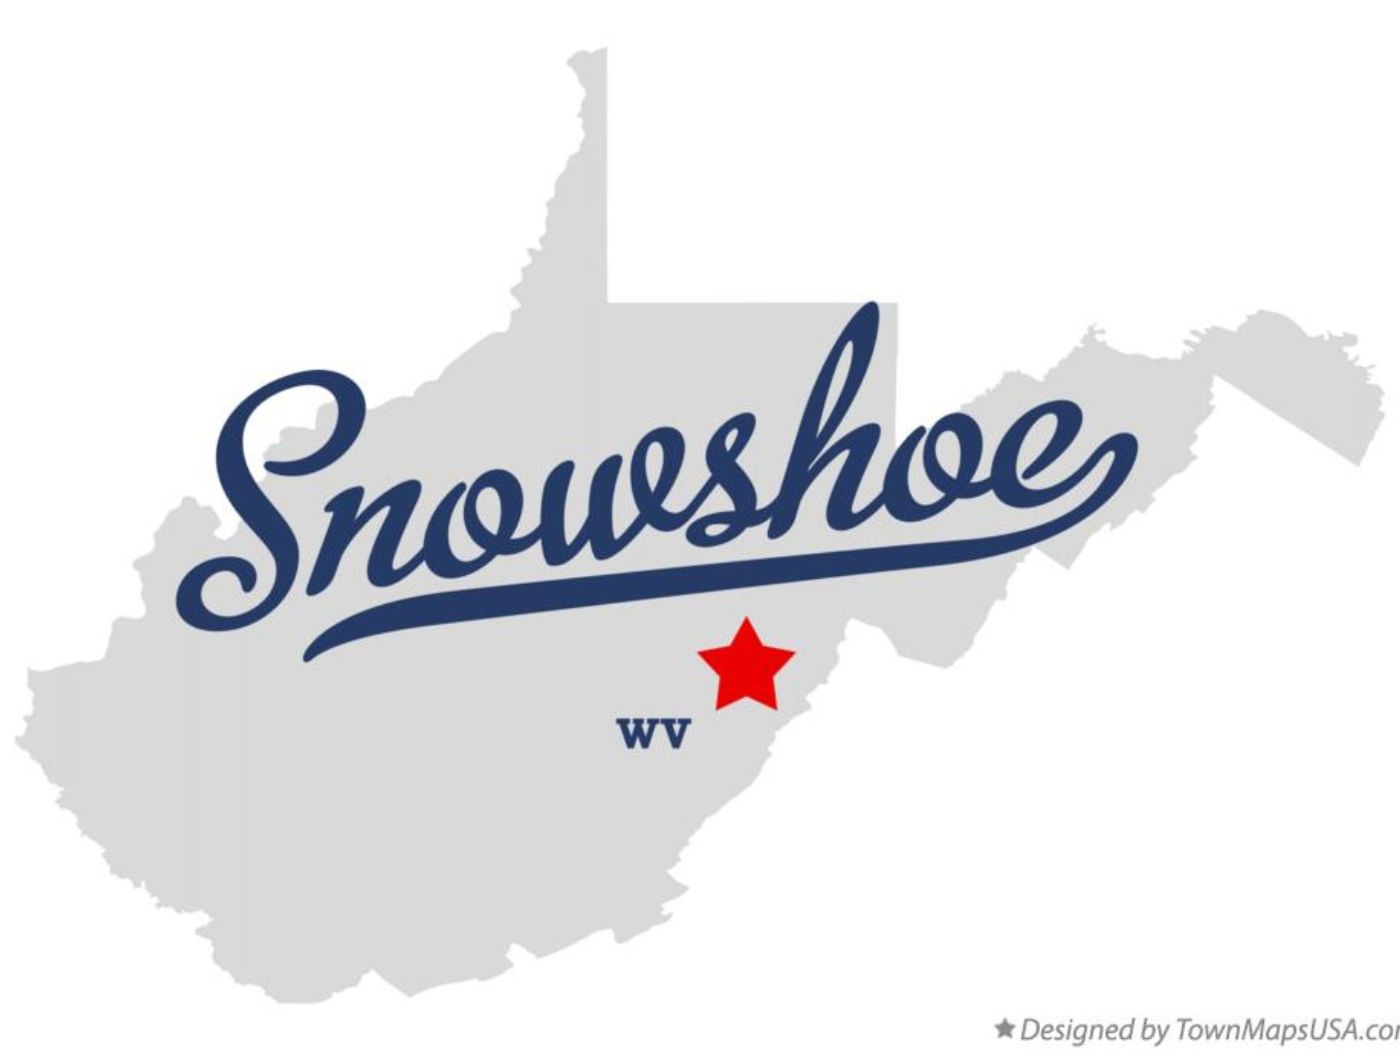 Snowshoe West Virginia Map